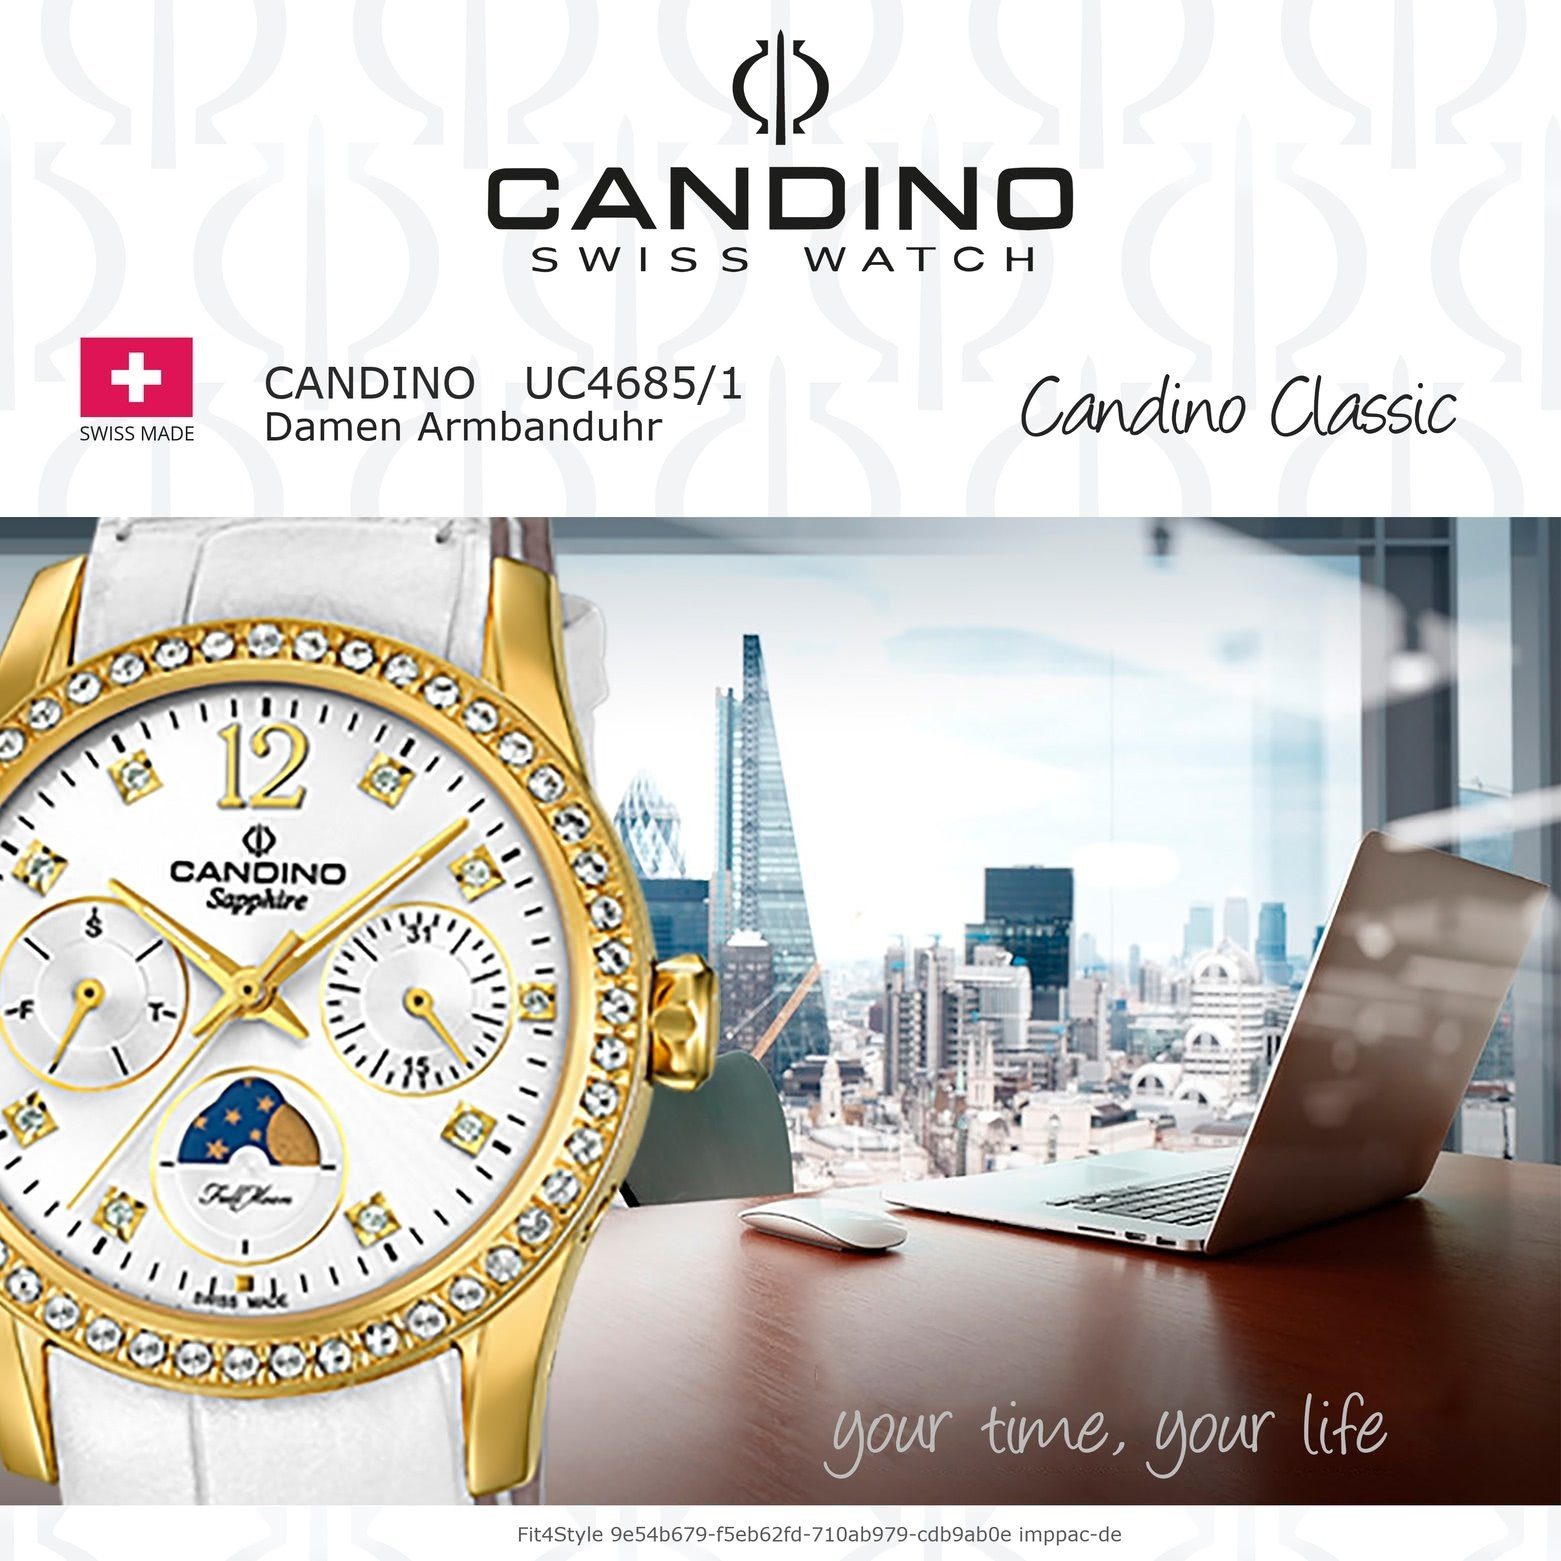 Edelstahlarmband rund, C4685/1, weiß Candino Candino Damen Classic Damenuhr Armbanduhr Quarzuhr